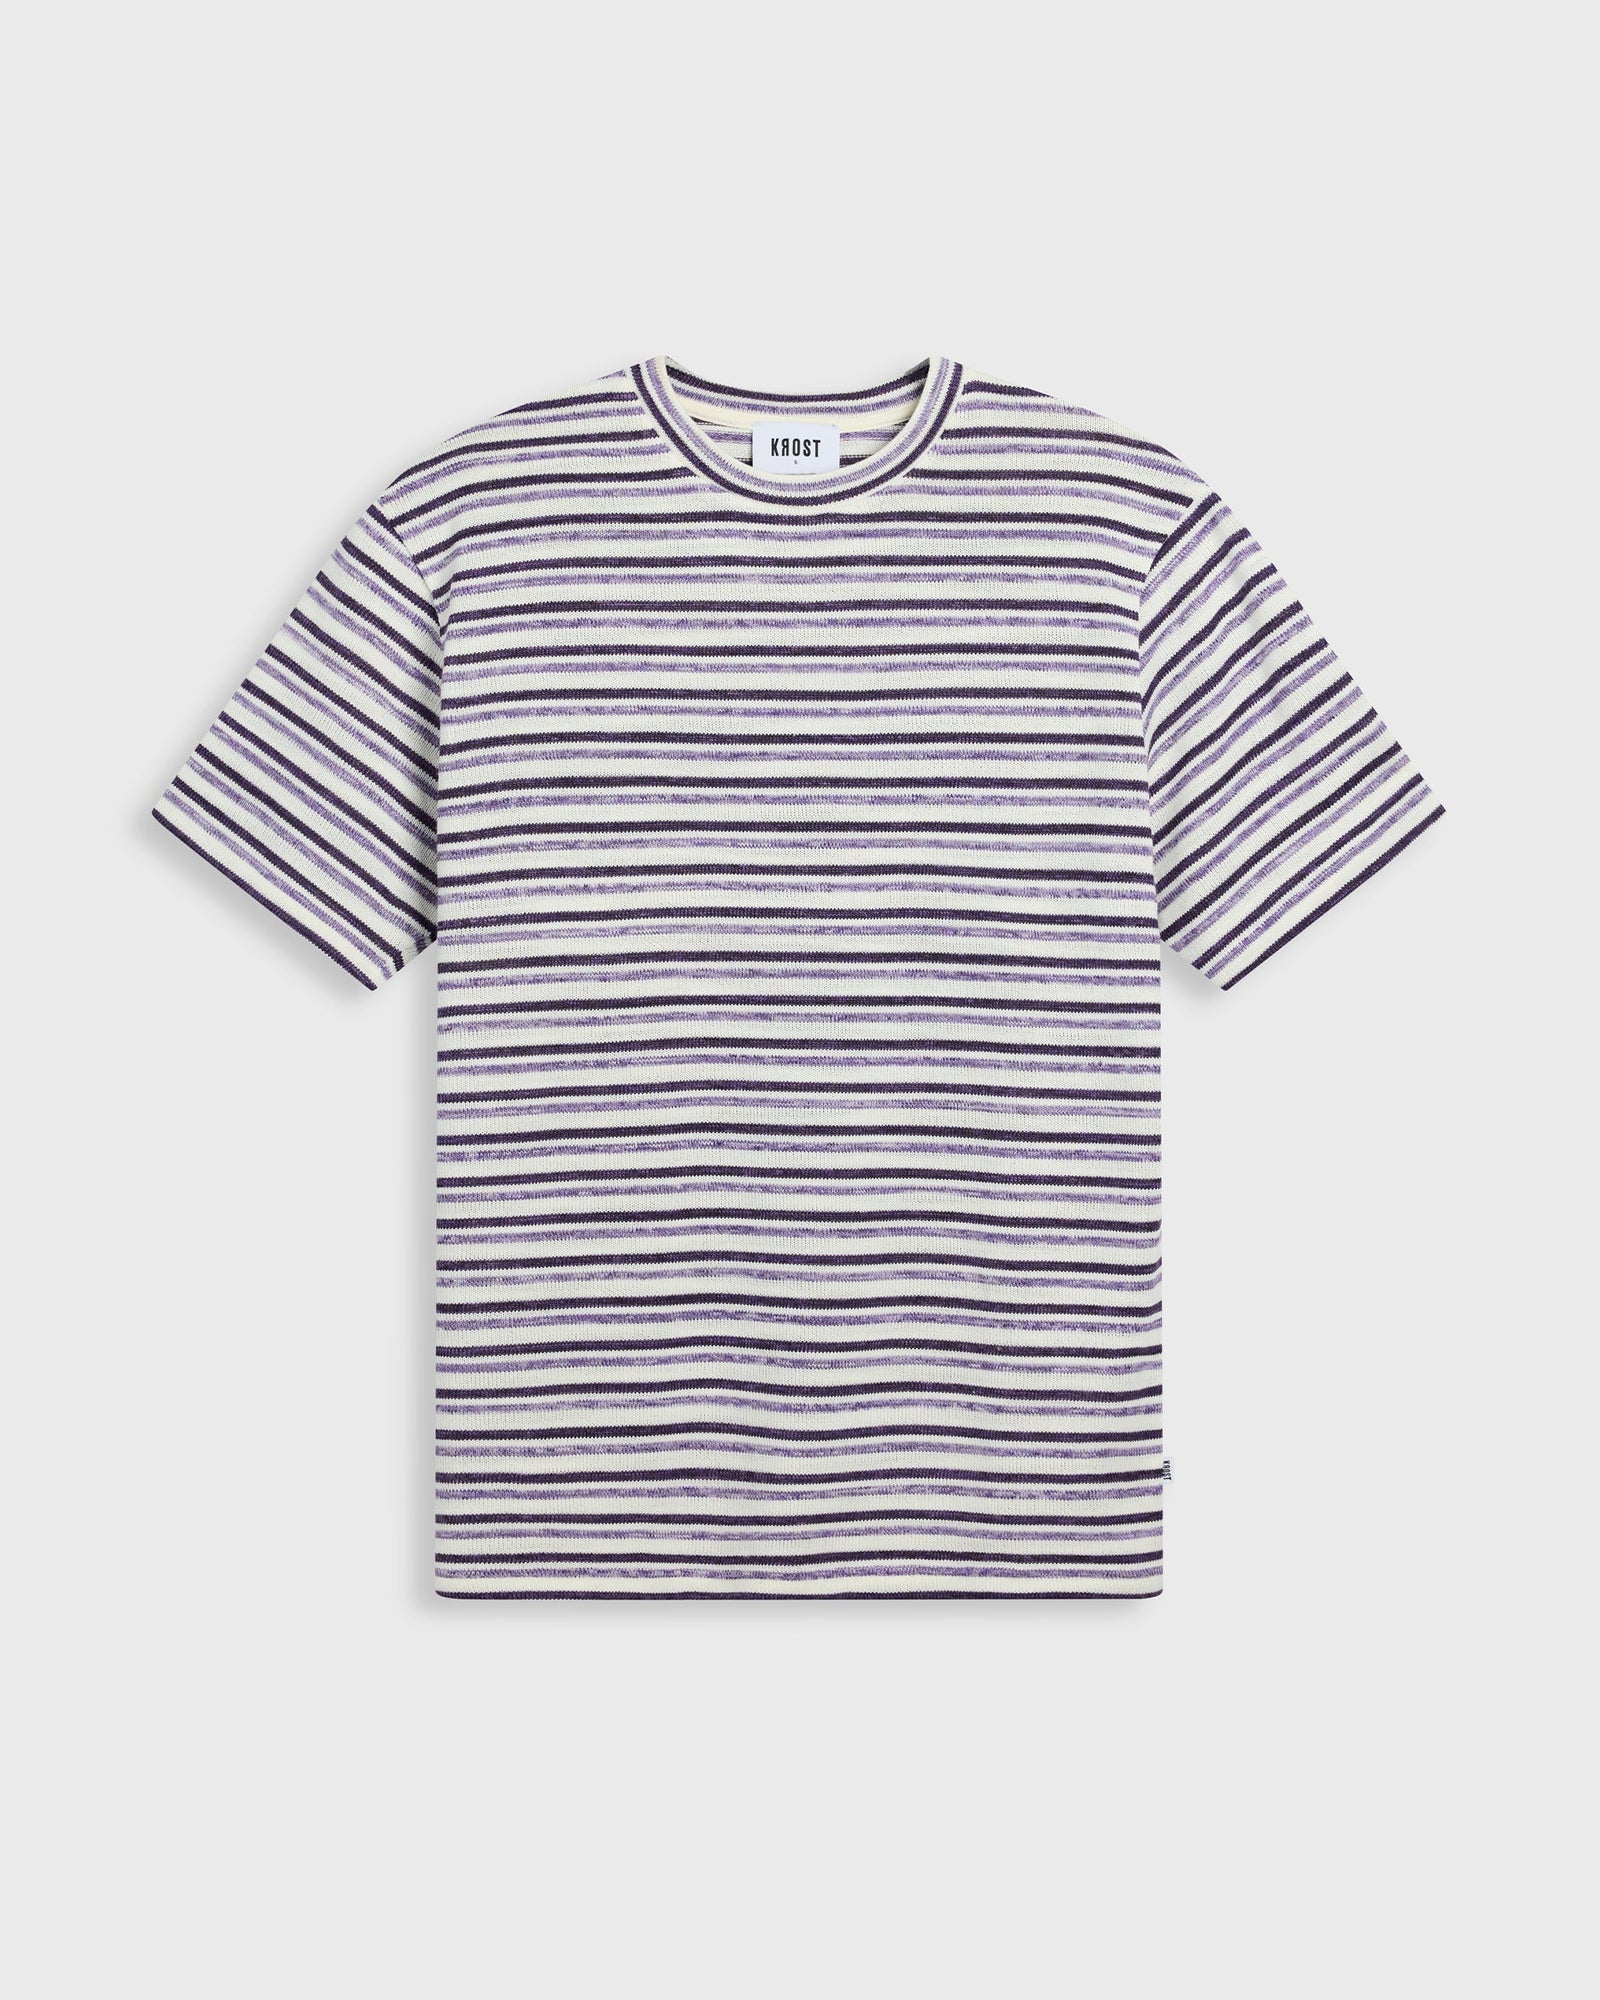 Purple, grey, white striped oversized tee shirt - unisex mens & womens designer fashion tees by Krost